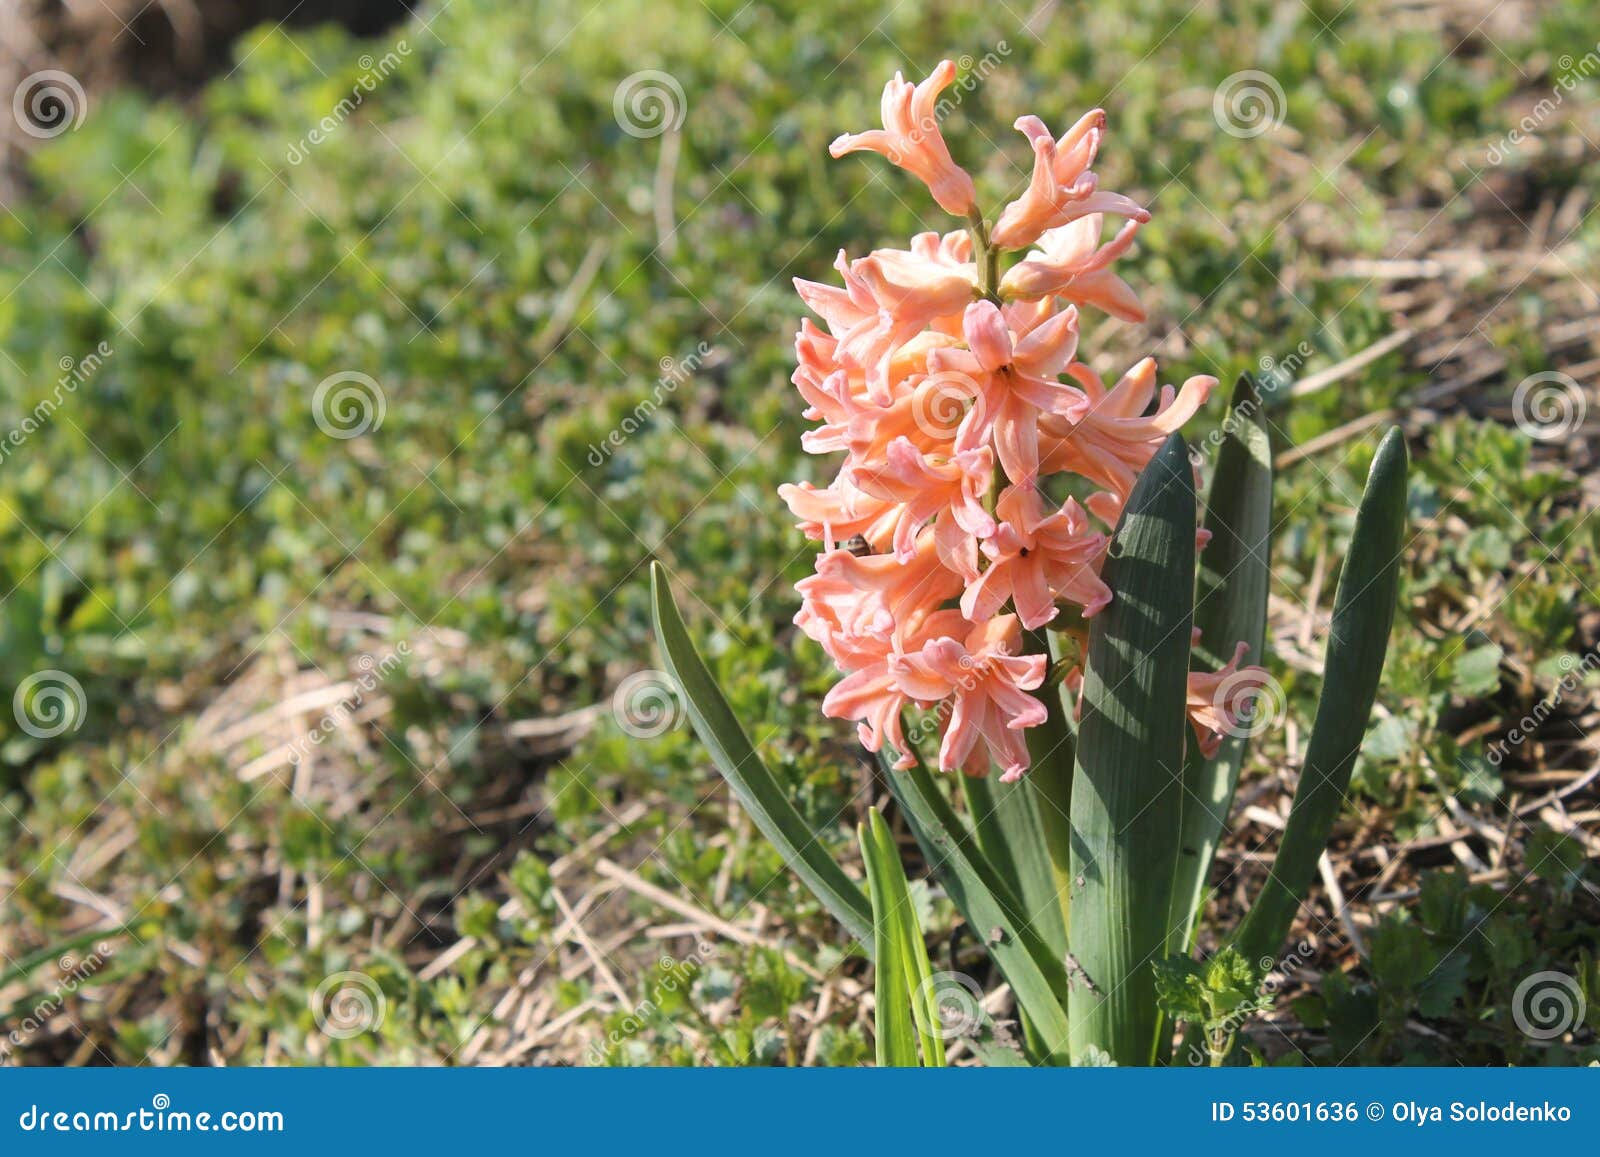 Jacinthe orange photo stock. Image du objet, fleur, jardin - 53601636